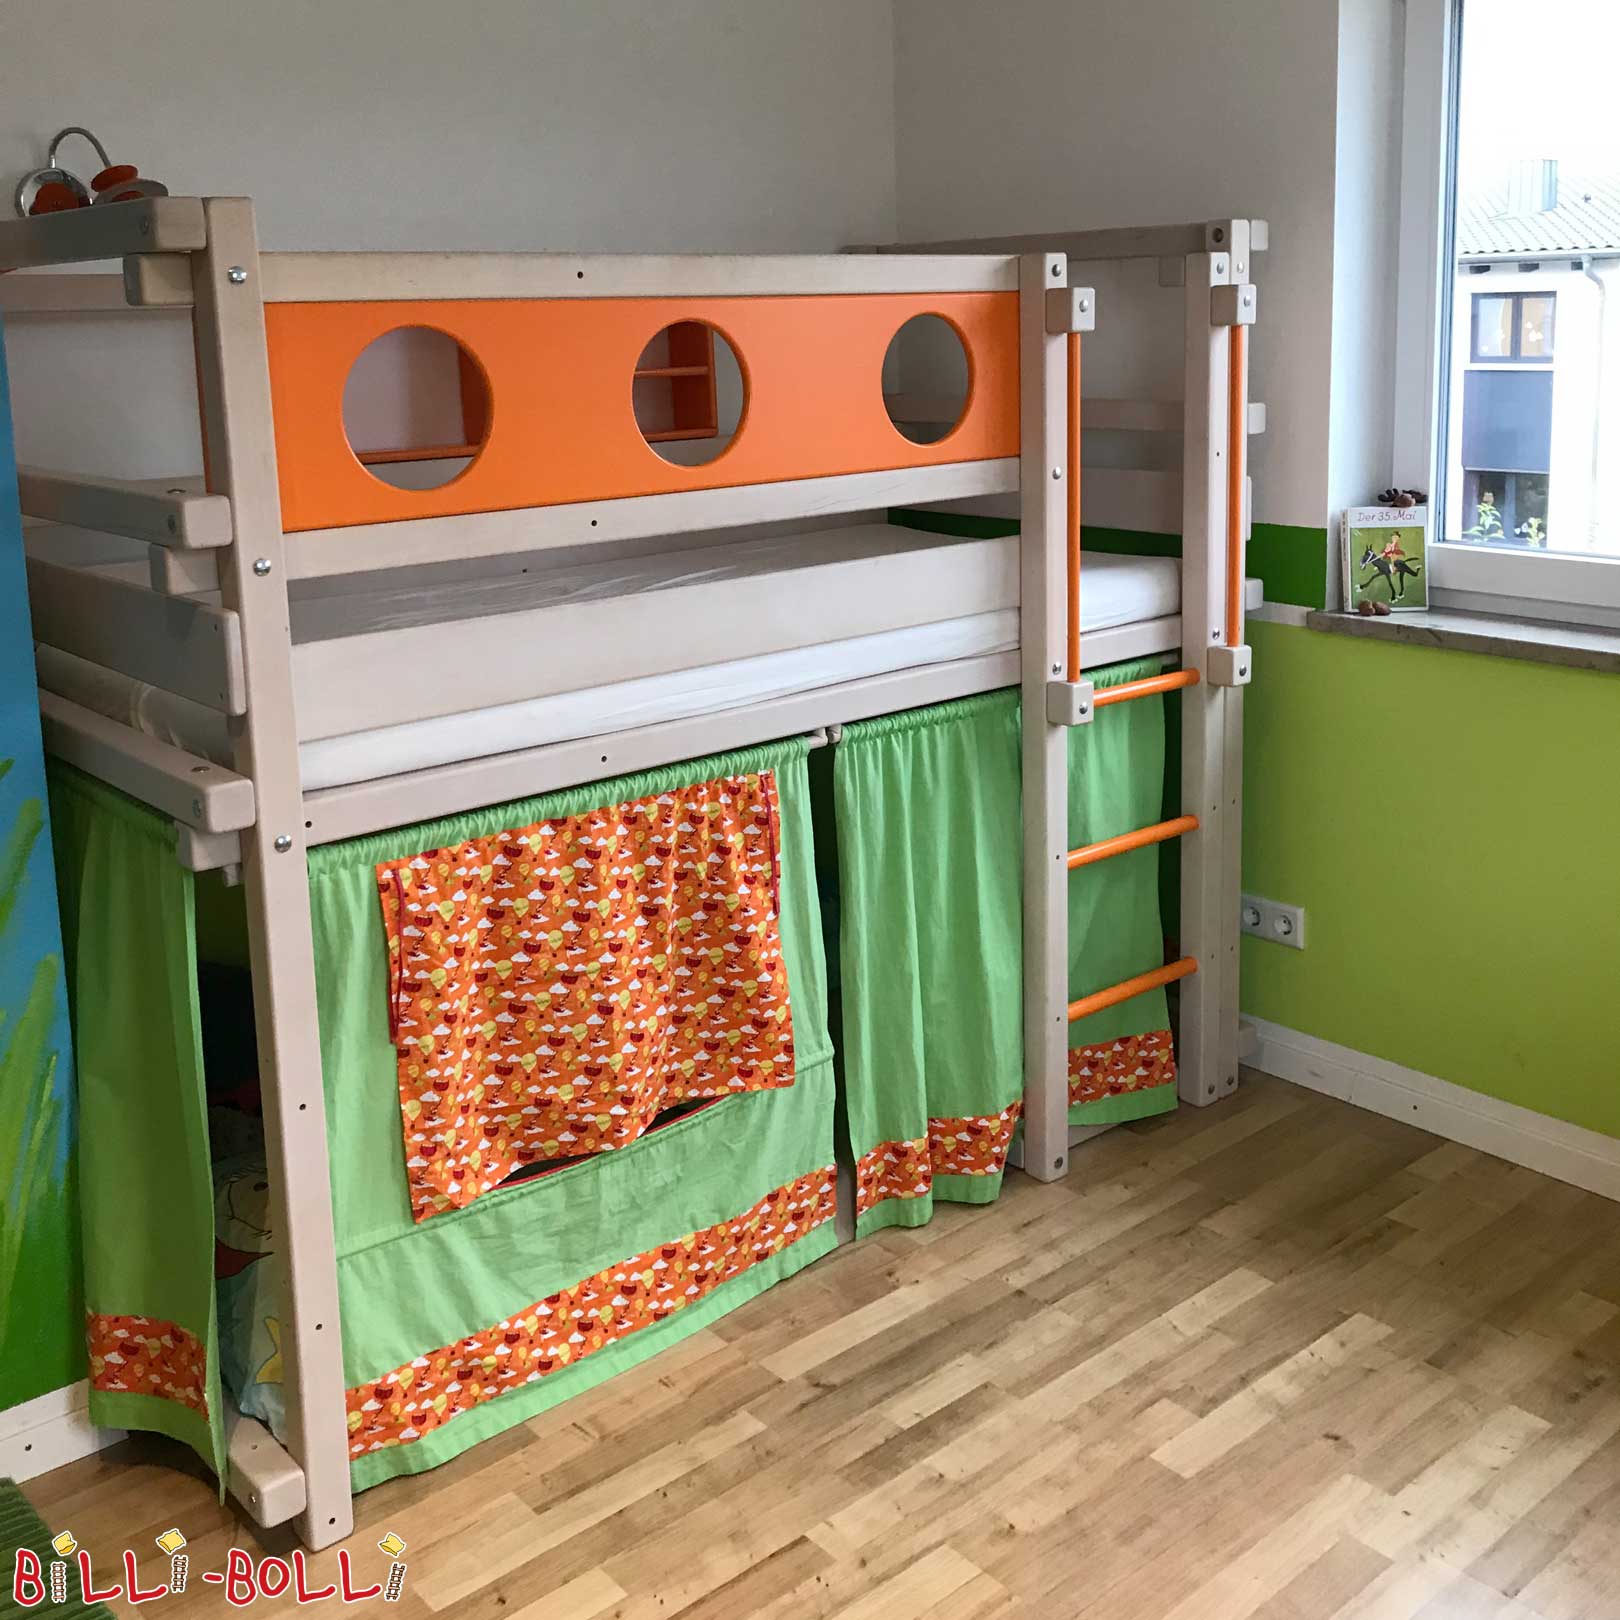 Media litera de color, la cama loft de media altura para niños pequeños (cama para niños pequeños) a partir de 3 años (Cama alta a media altura)